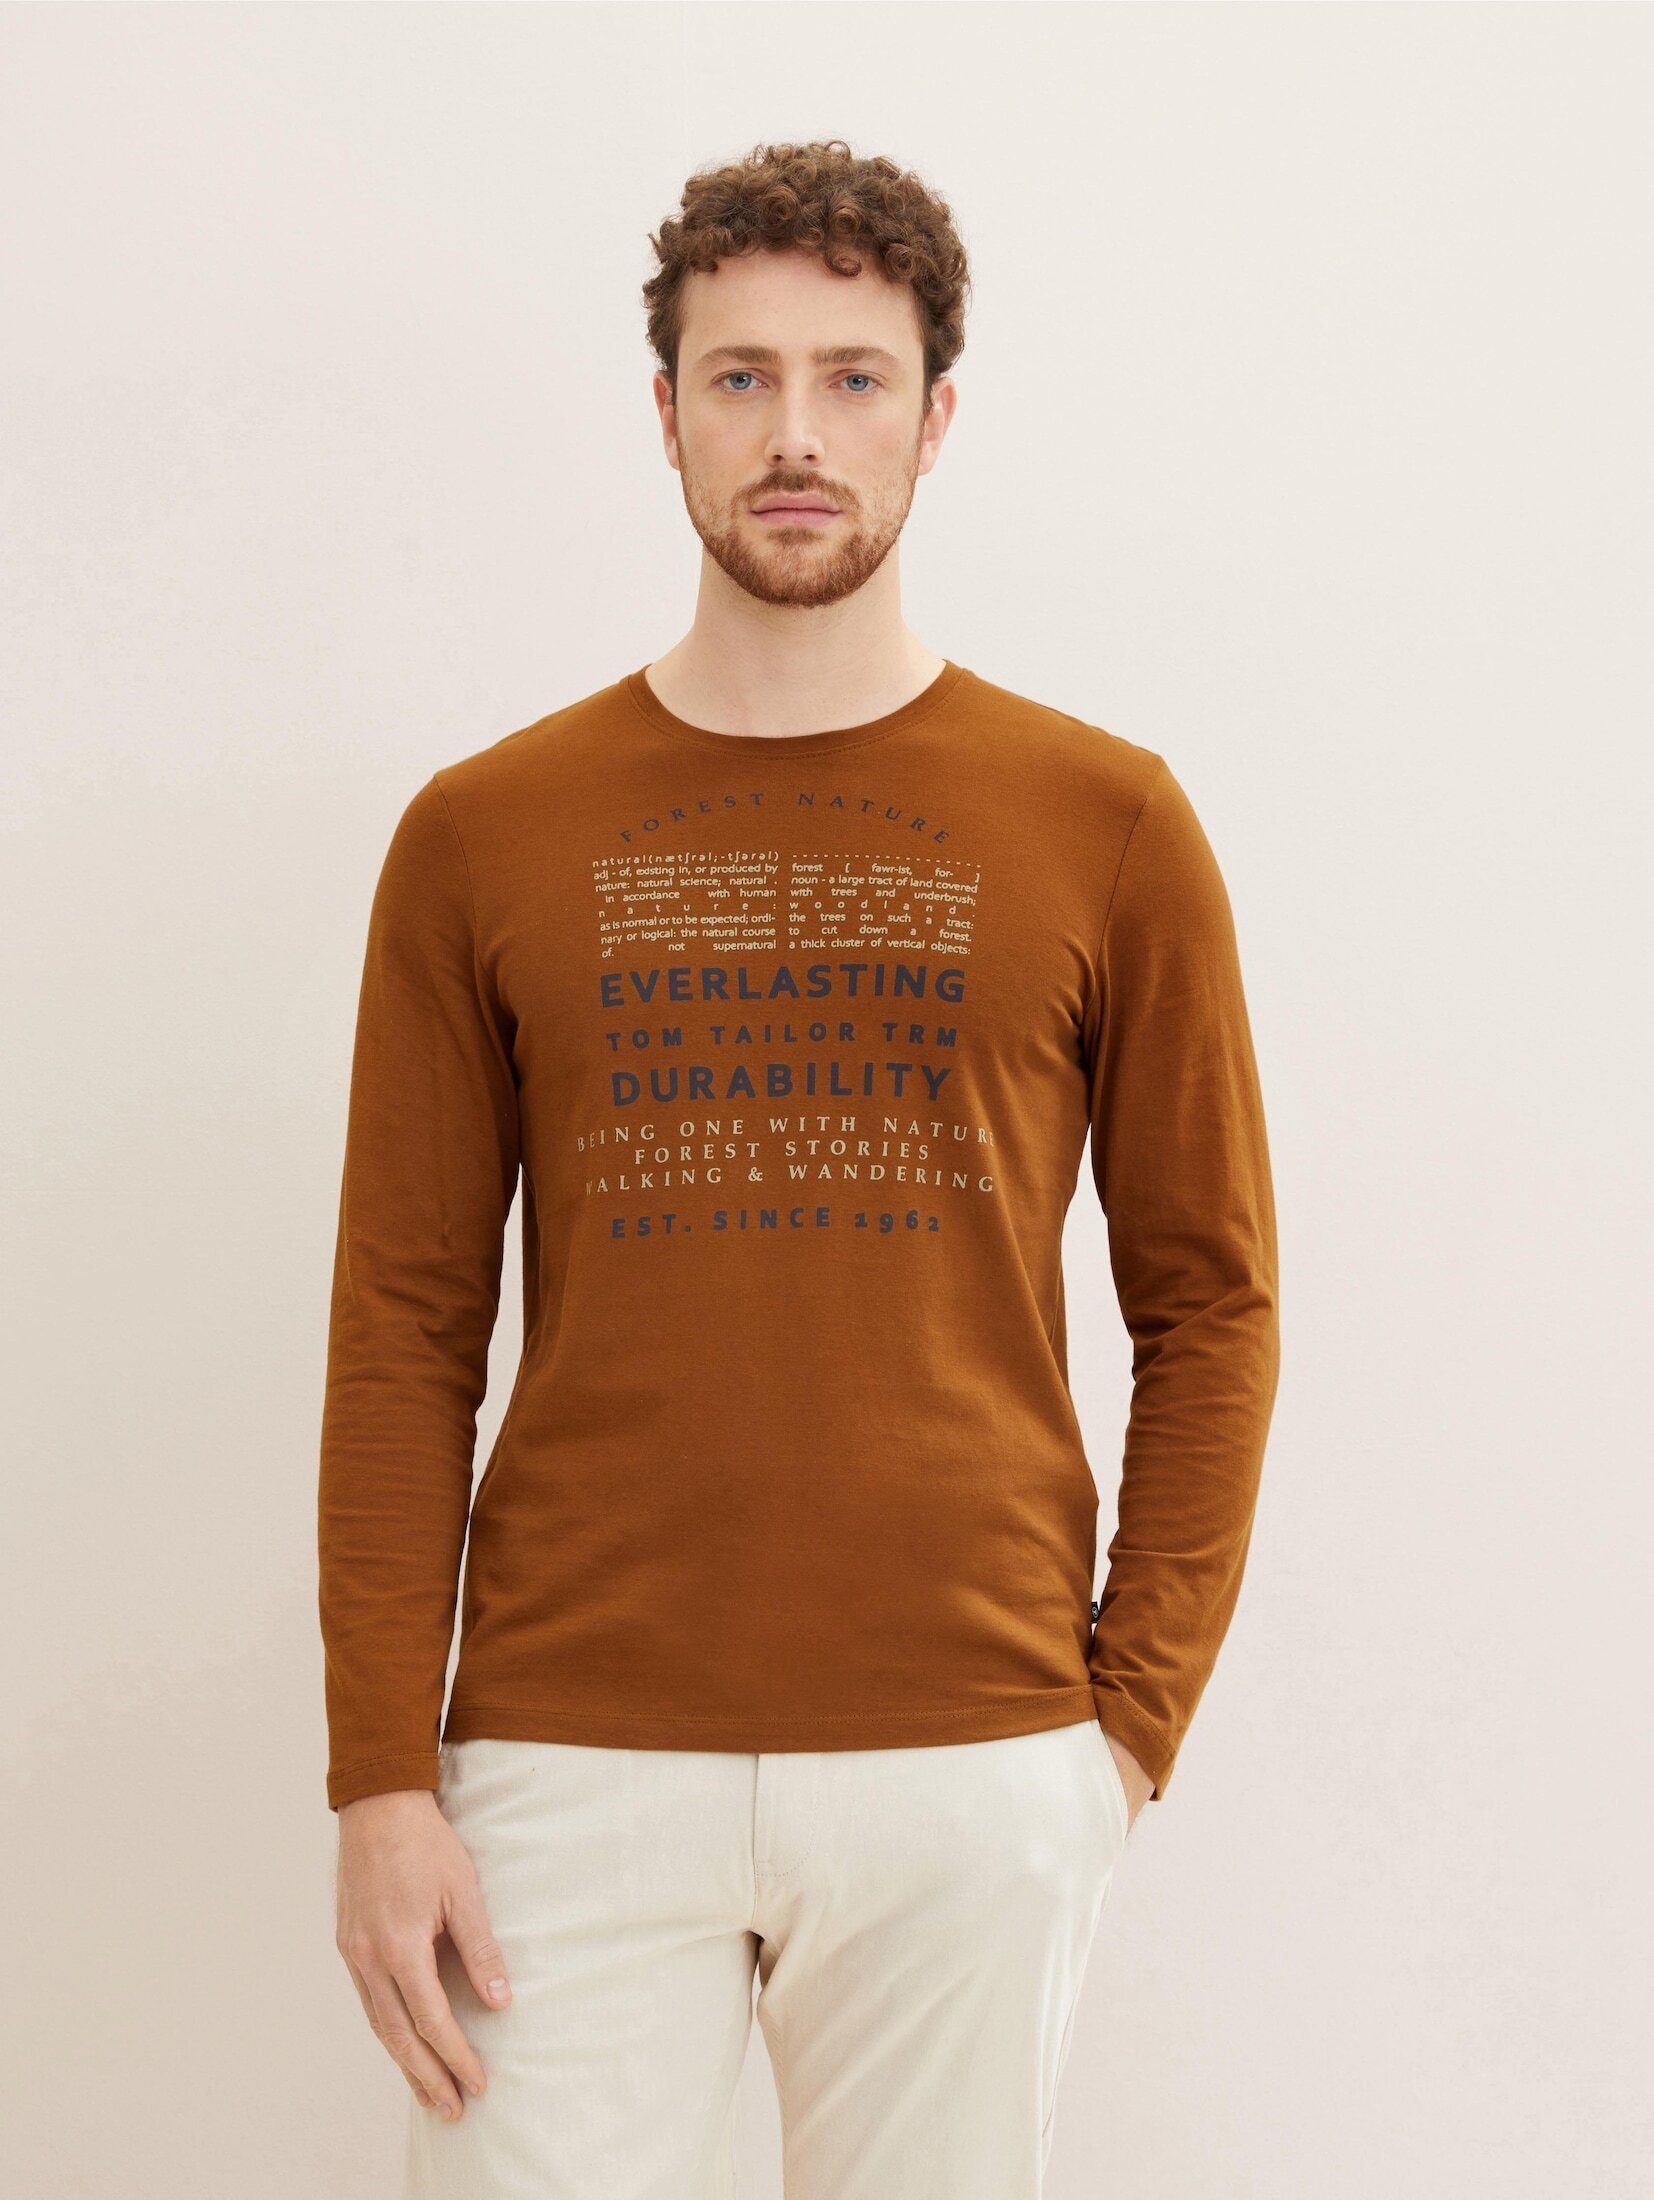 Langarmshirt T-Shirt brown TAILOR equestrian TOM mit Print